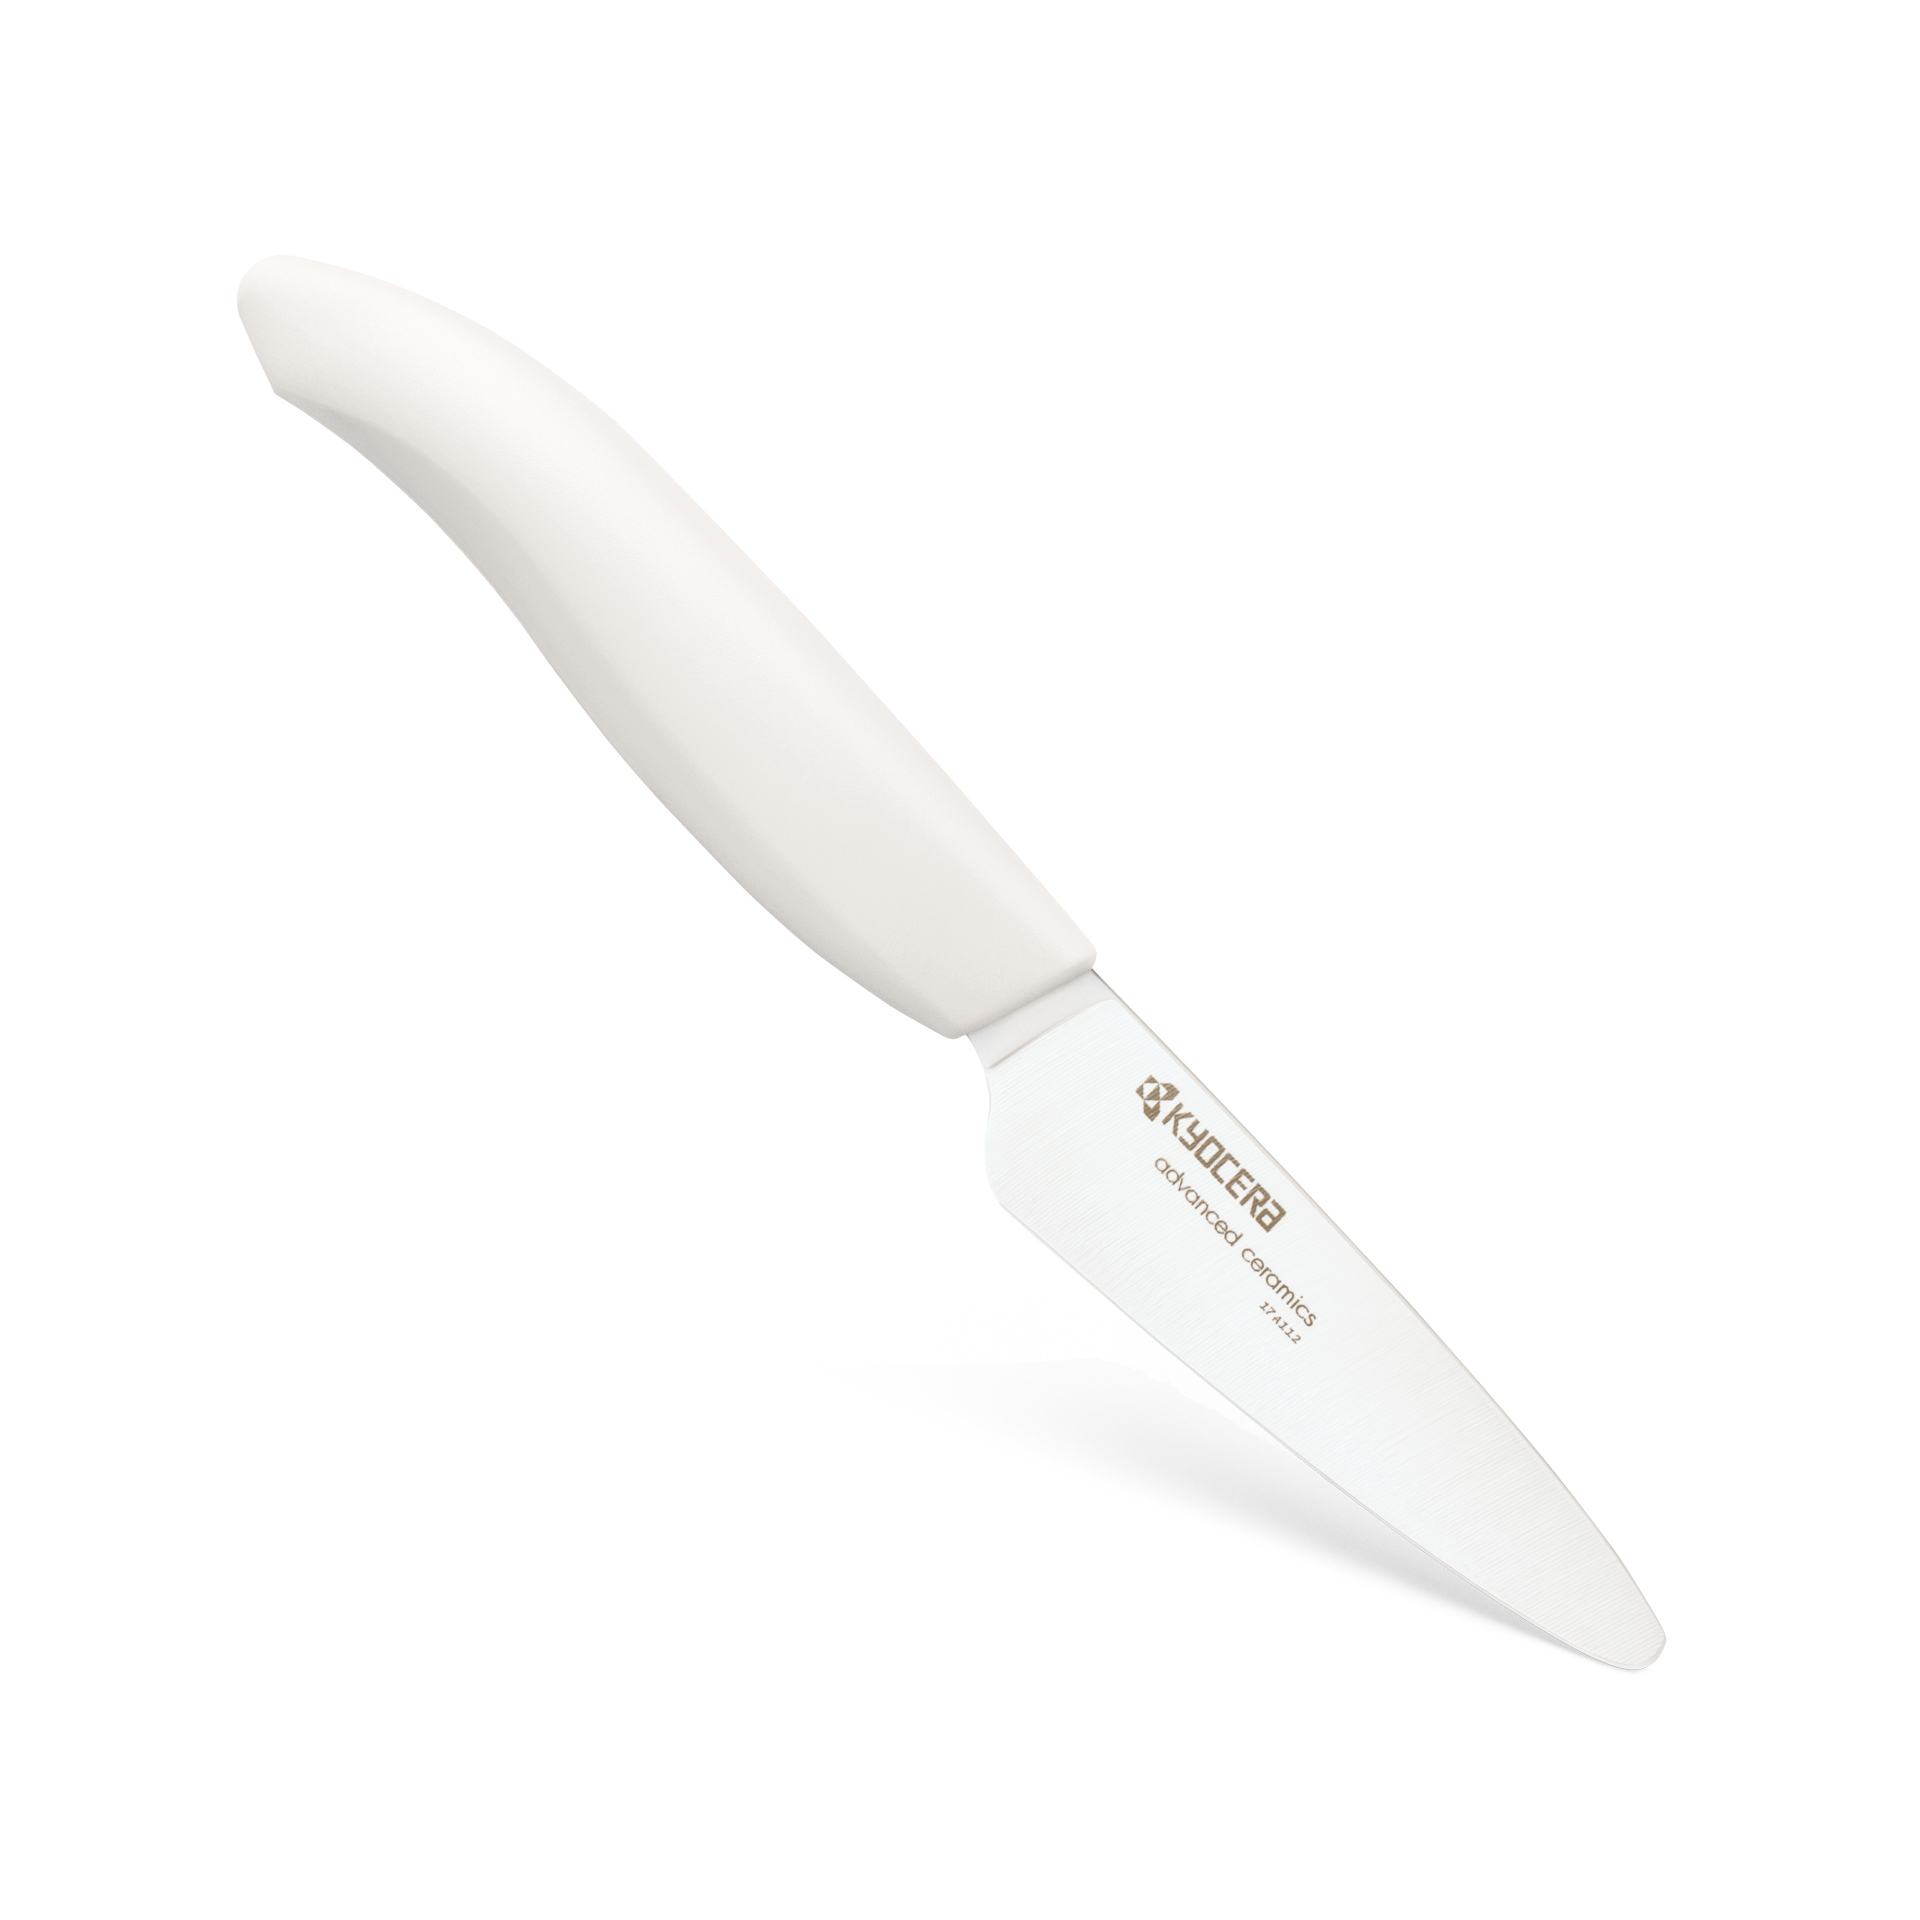 https://cutlery.kyocera.com/images/thumbs/0000755_revolution-3-ceramic-paring-knife-white.jpeg